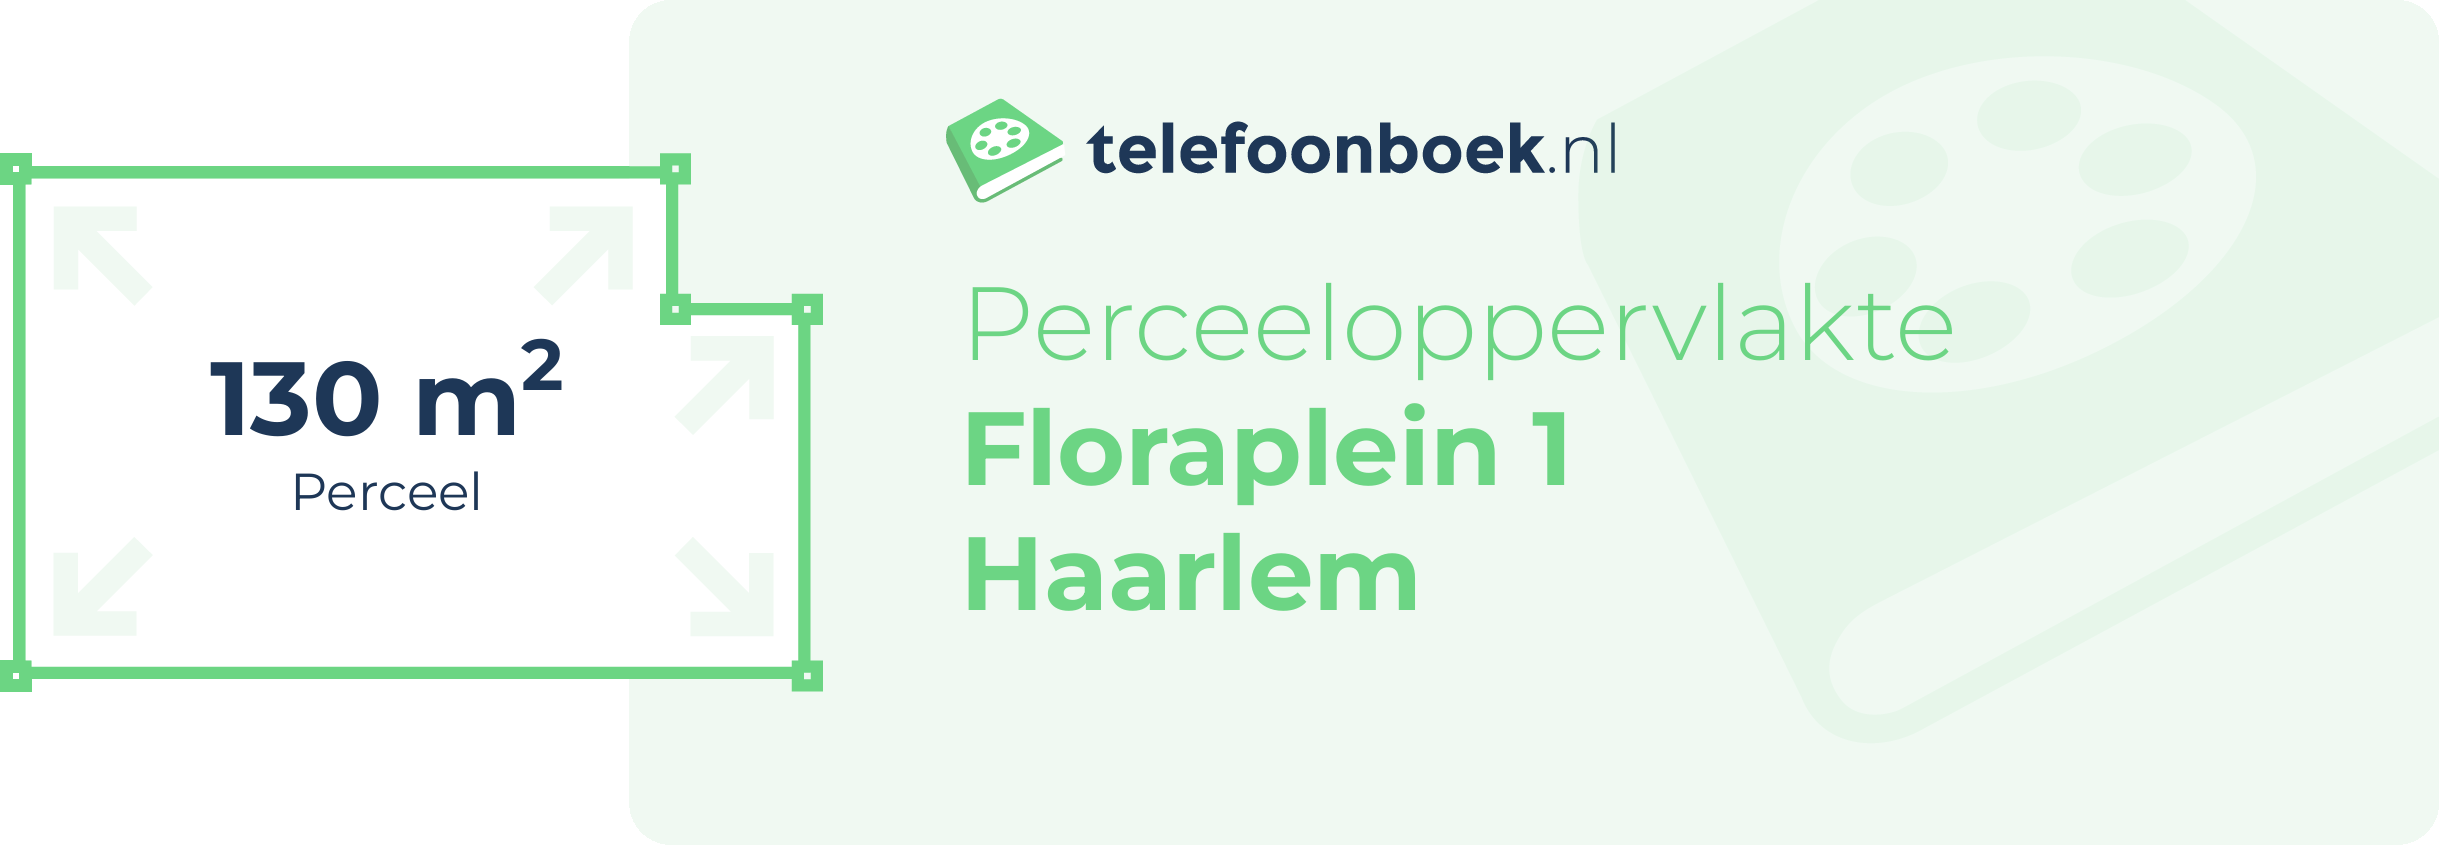 Perceeloppervlakte Floraplein 1 Haarlem